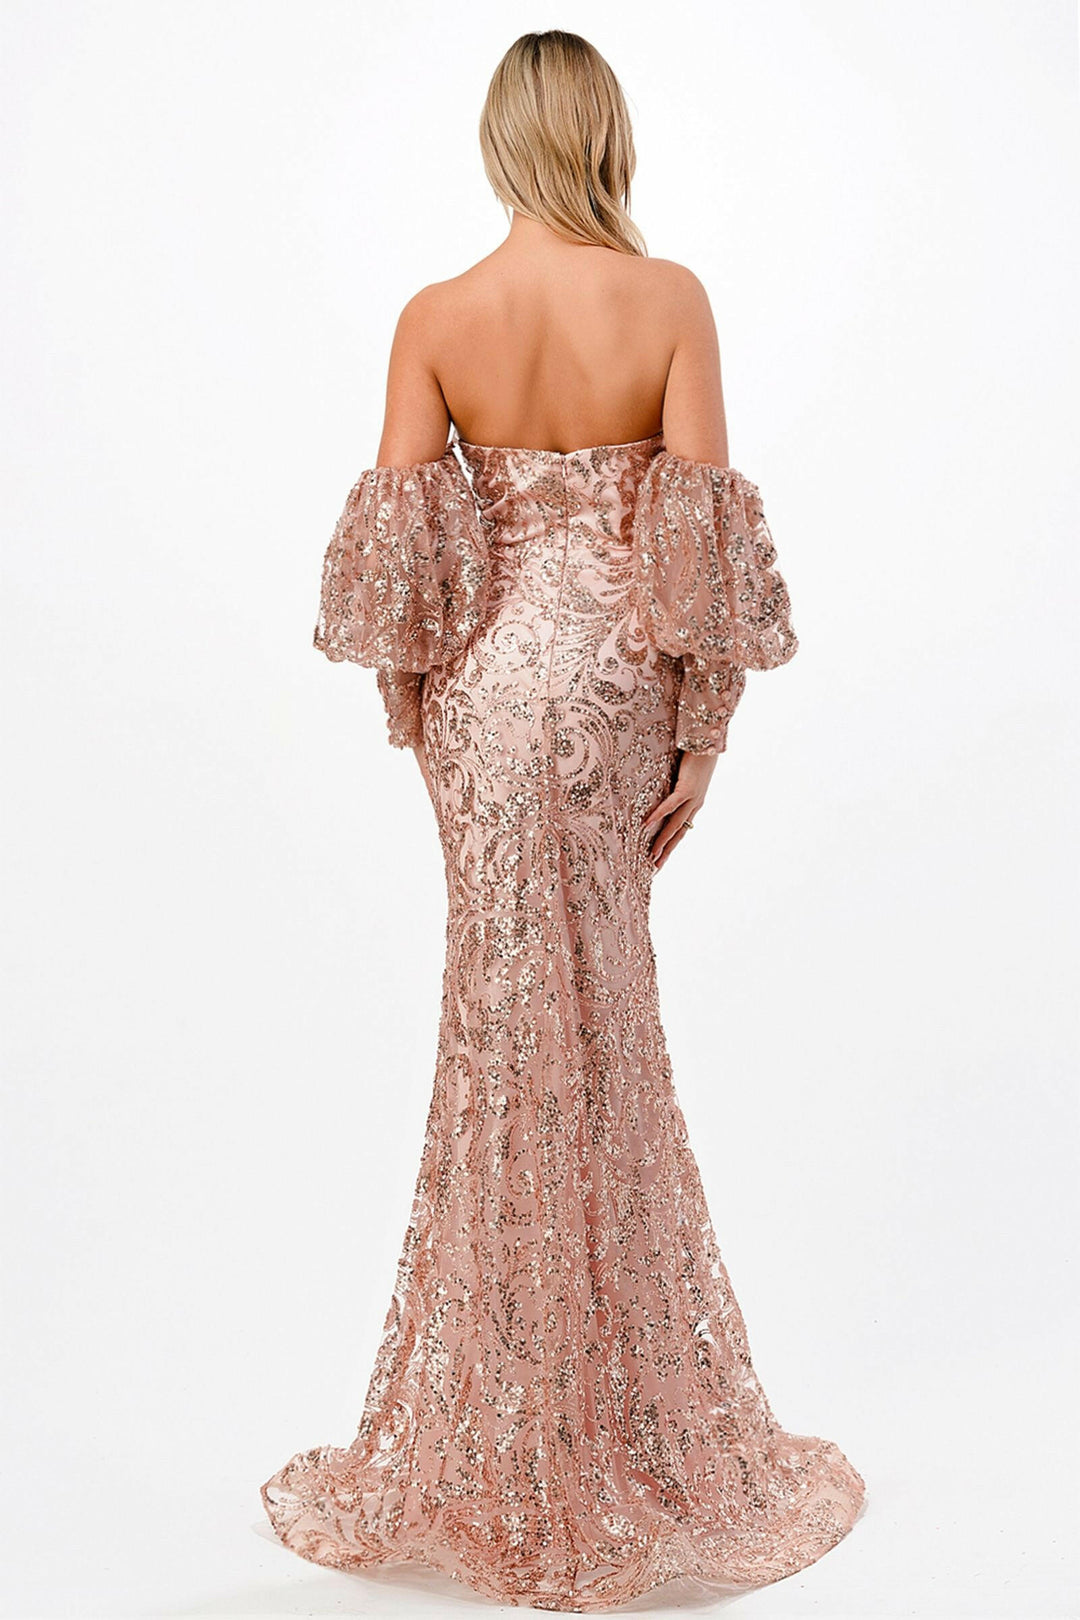 Strapless Fitted Glitter Mermaid Sweetheart Long Prom Dress CDJ820-1